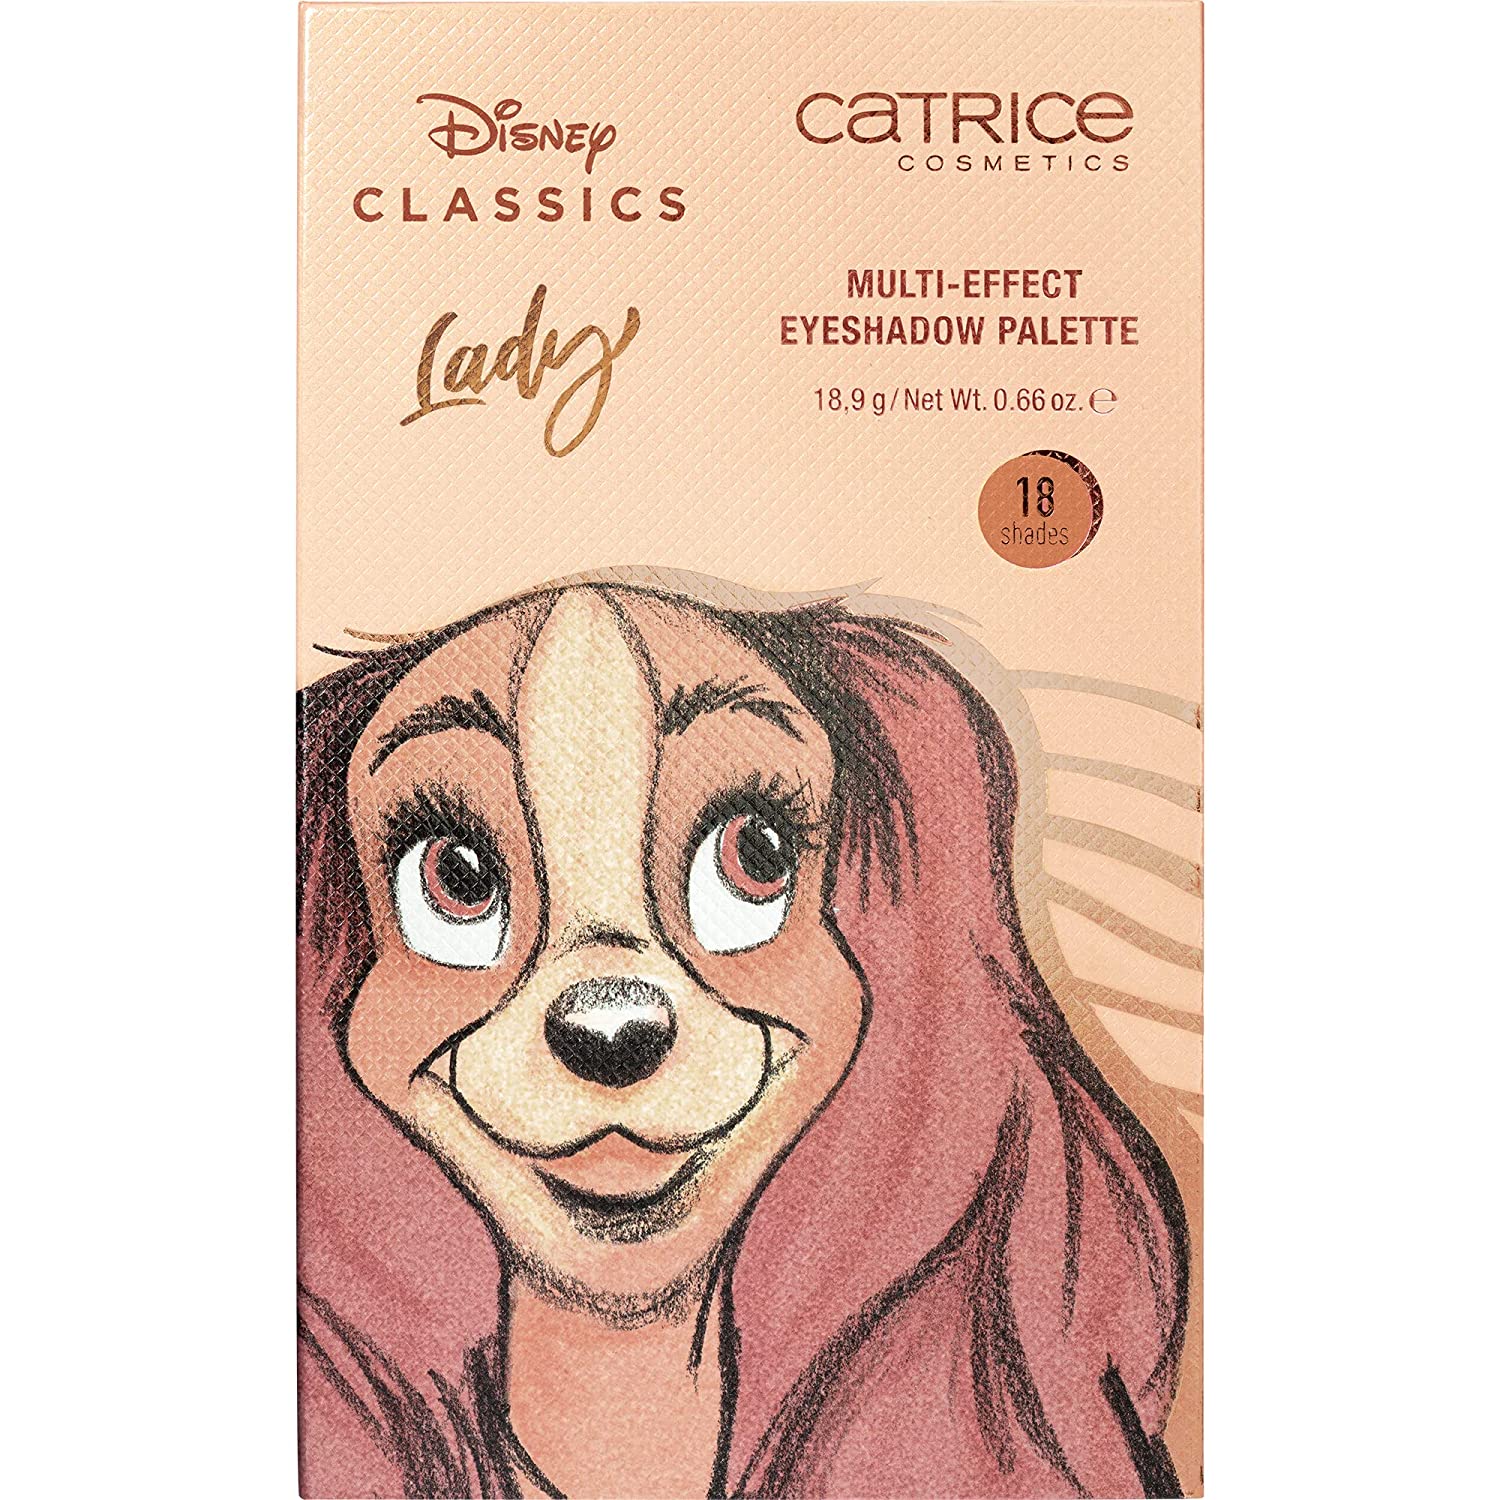 Catrice Disney Classics Lady Multi-Effect Eyeshadow Palette, No. 020 True L, ‎020 love